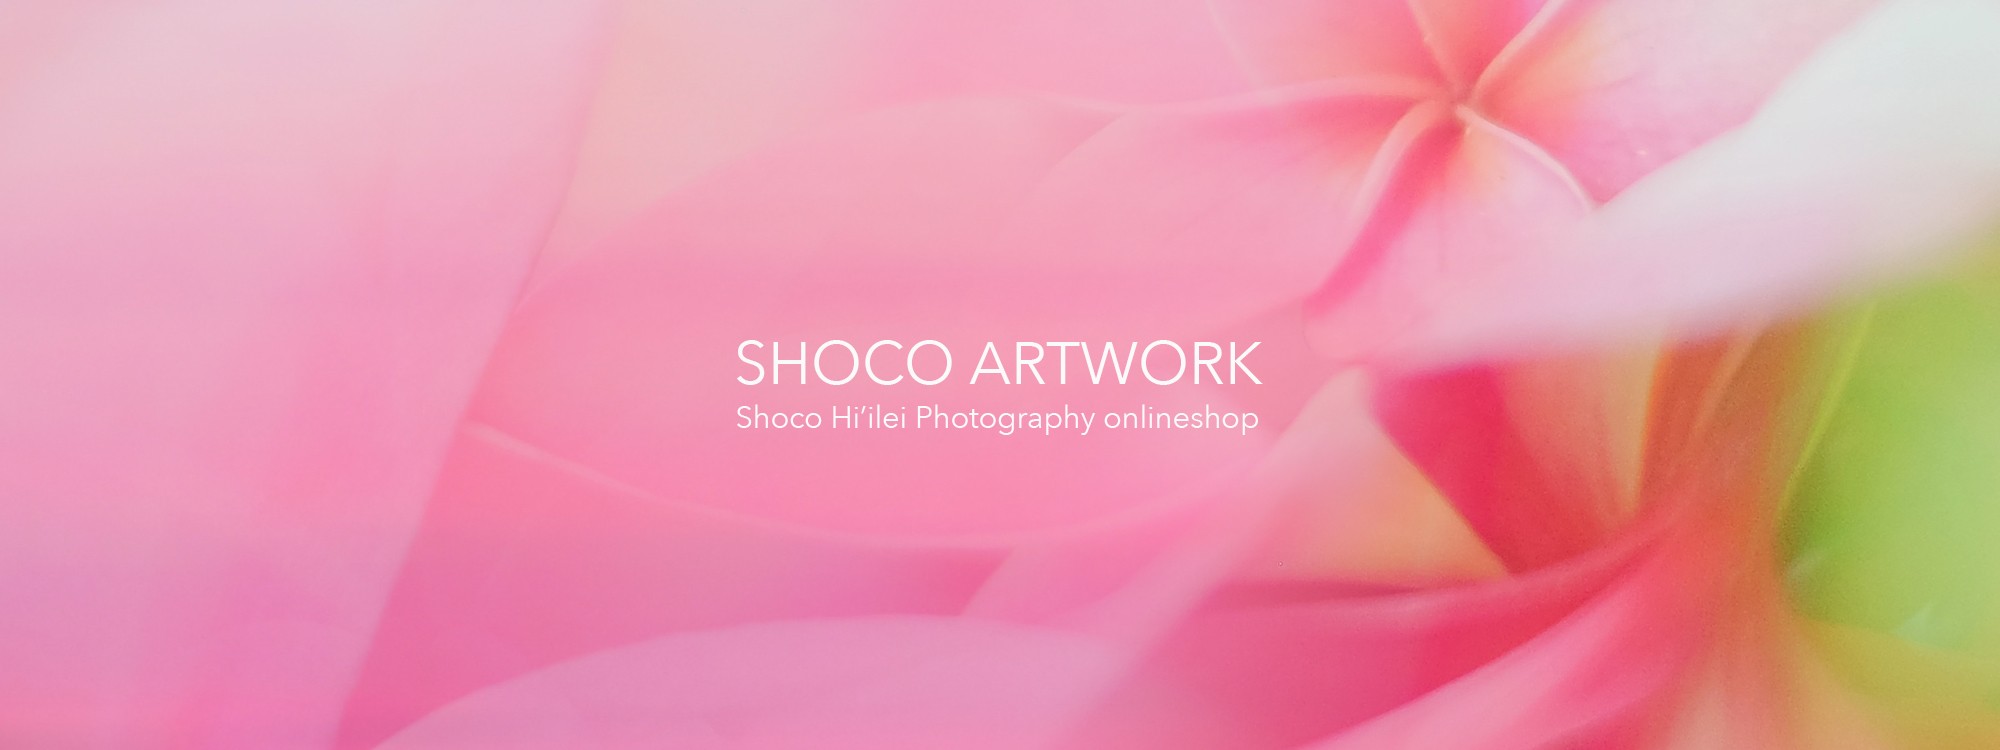 SHOCO ARTWORK